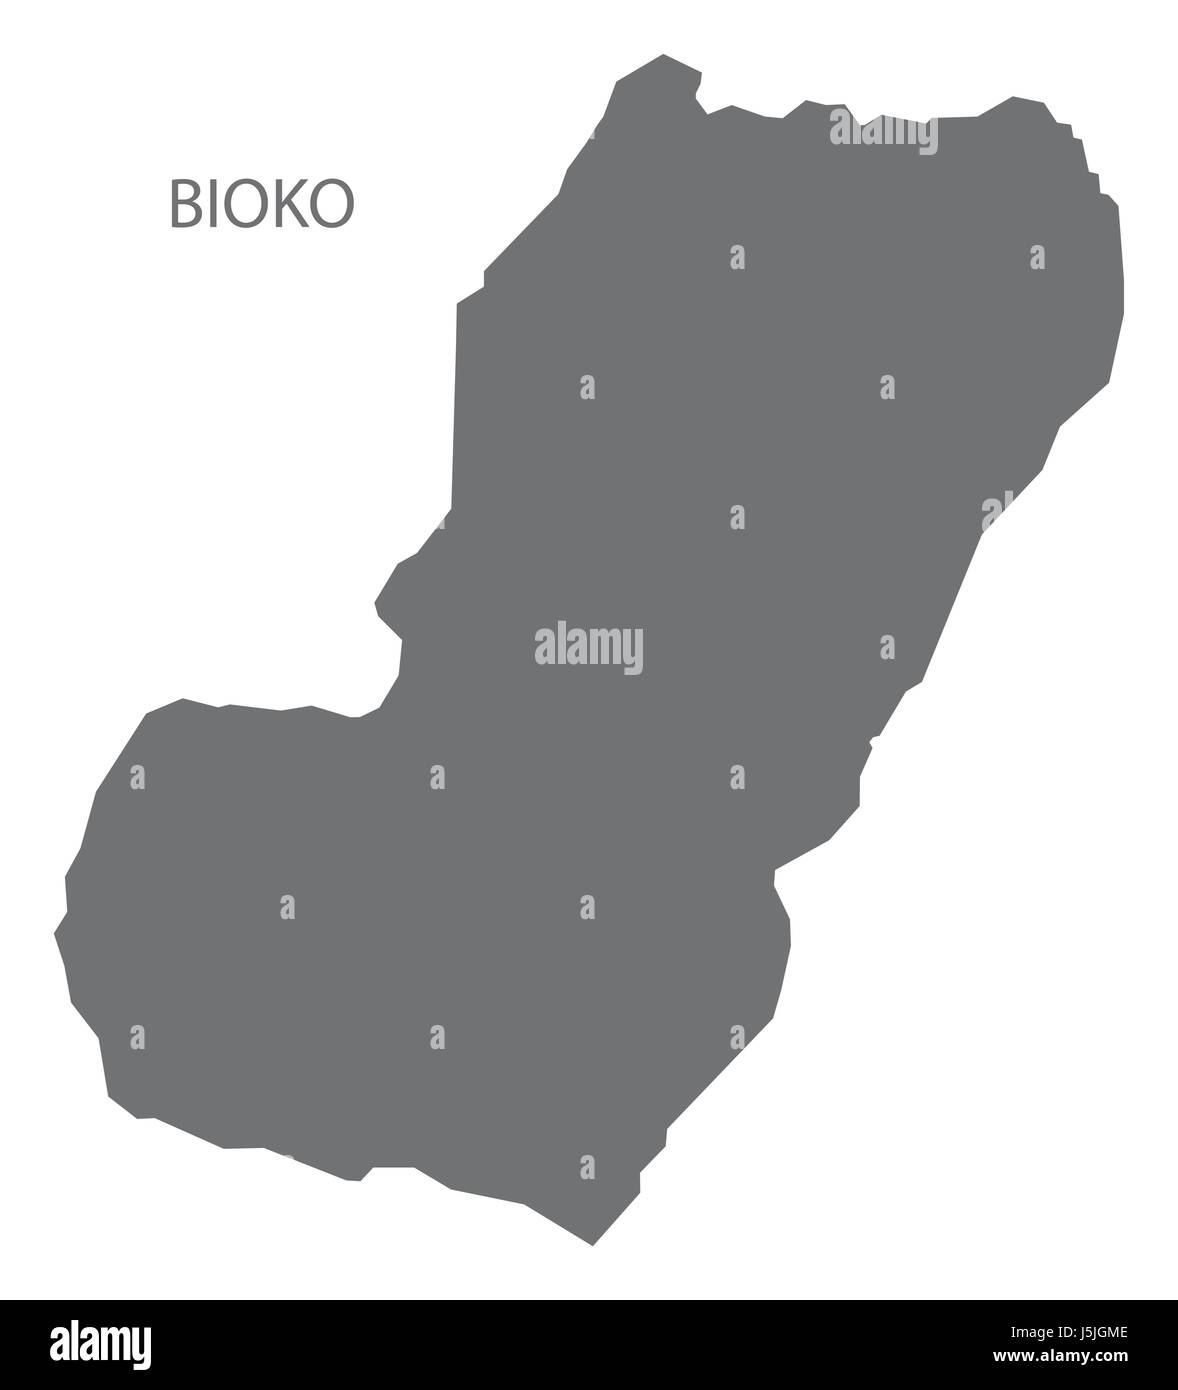 Bioko Equatorial Guinea map grey illustration silhouette Stock Vector